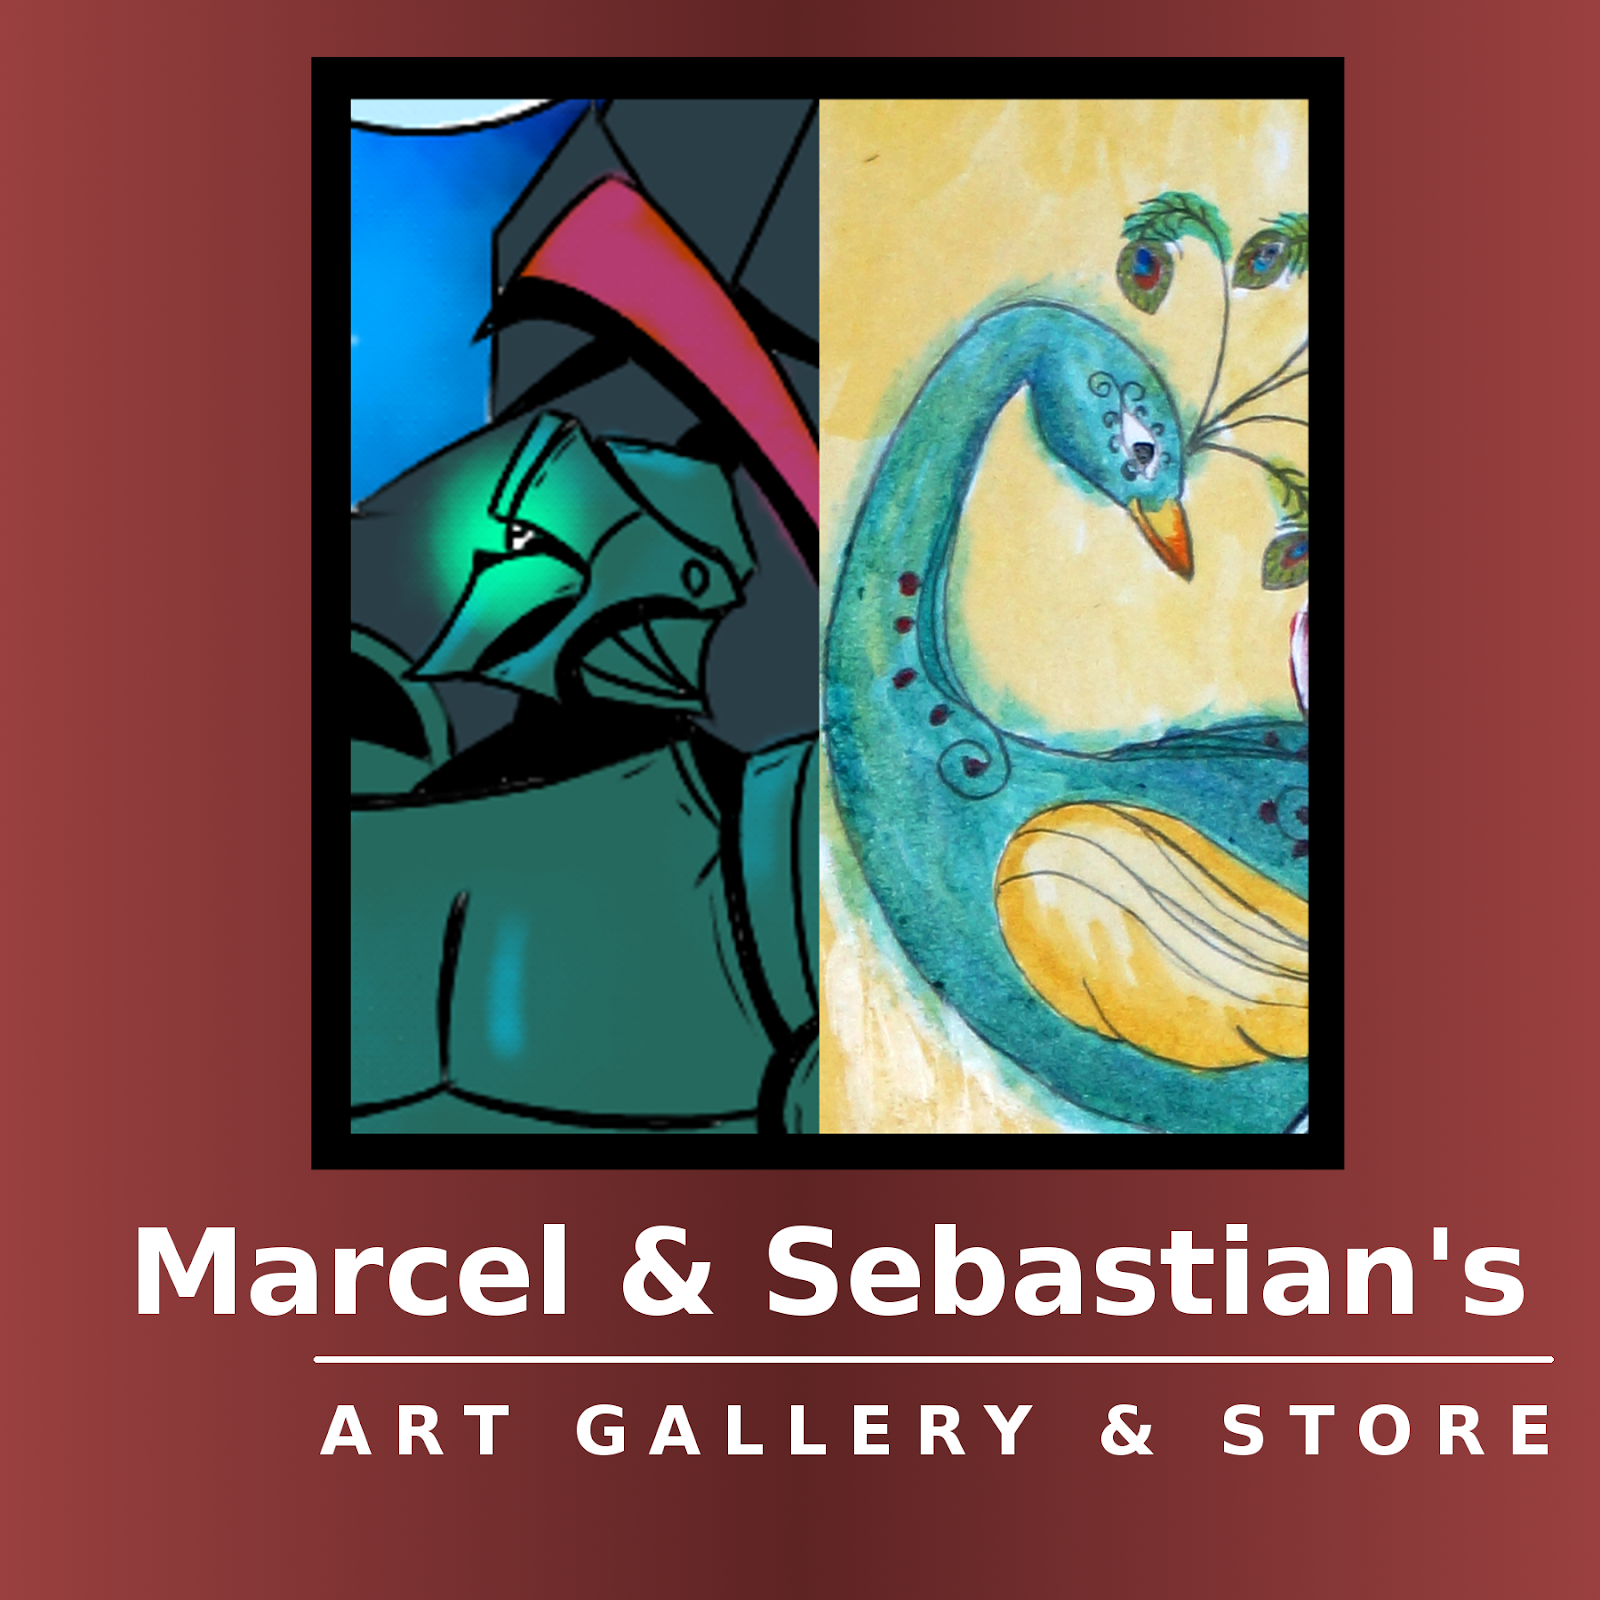 Marcel & Sebastian's Art Gallery